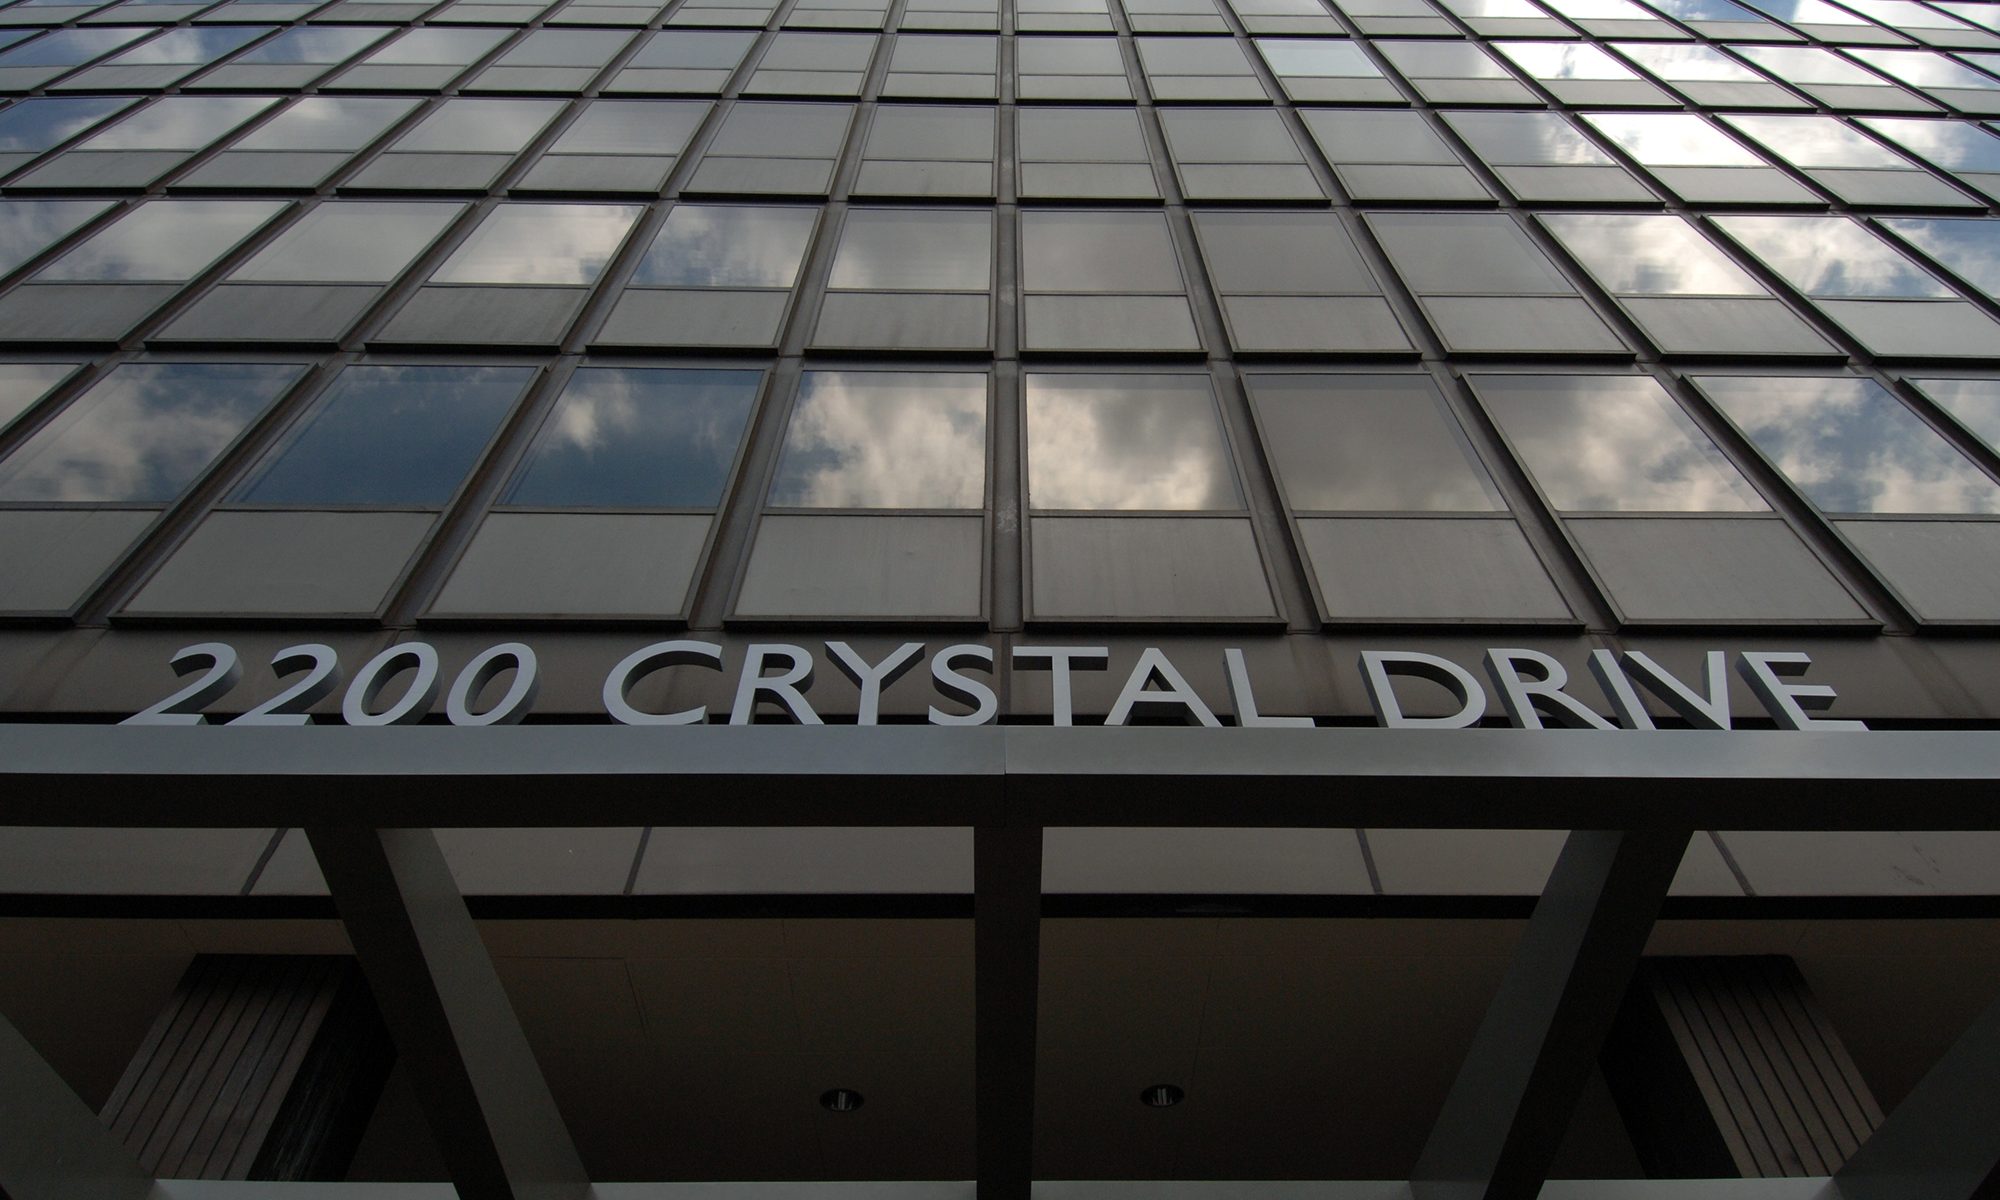 Crystal Plaza address sign